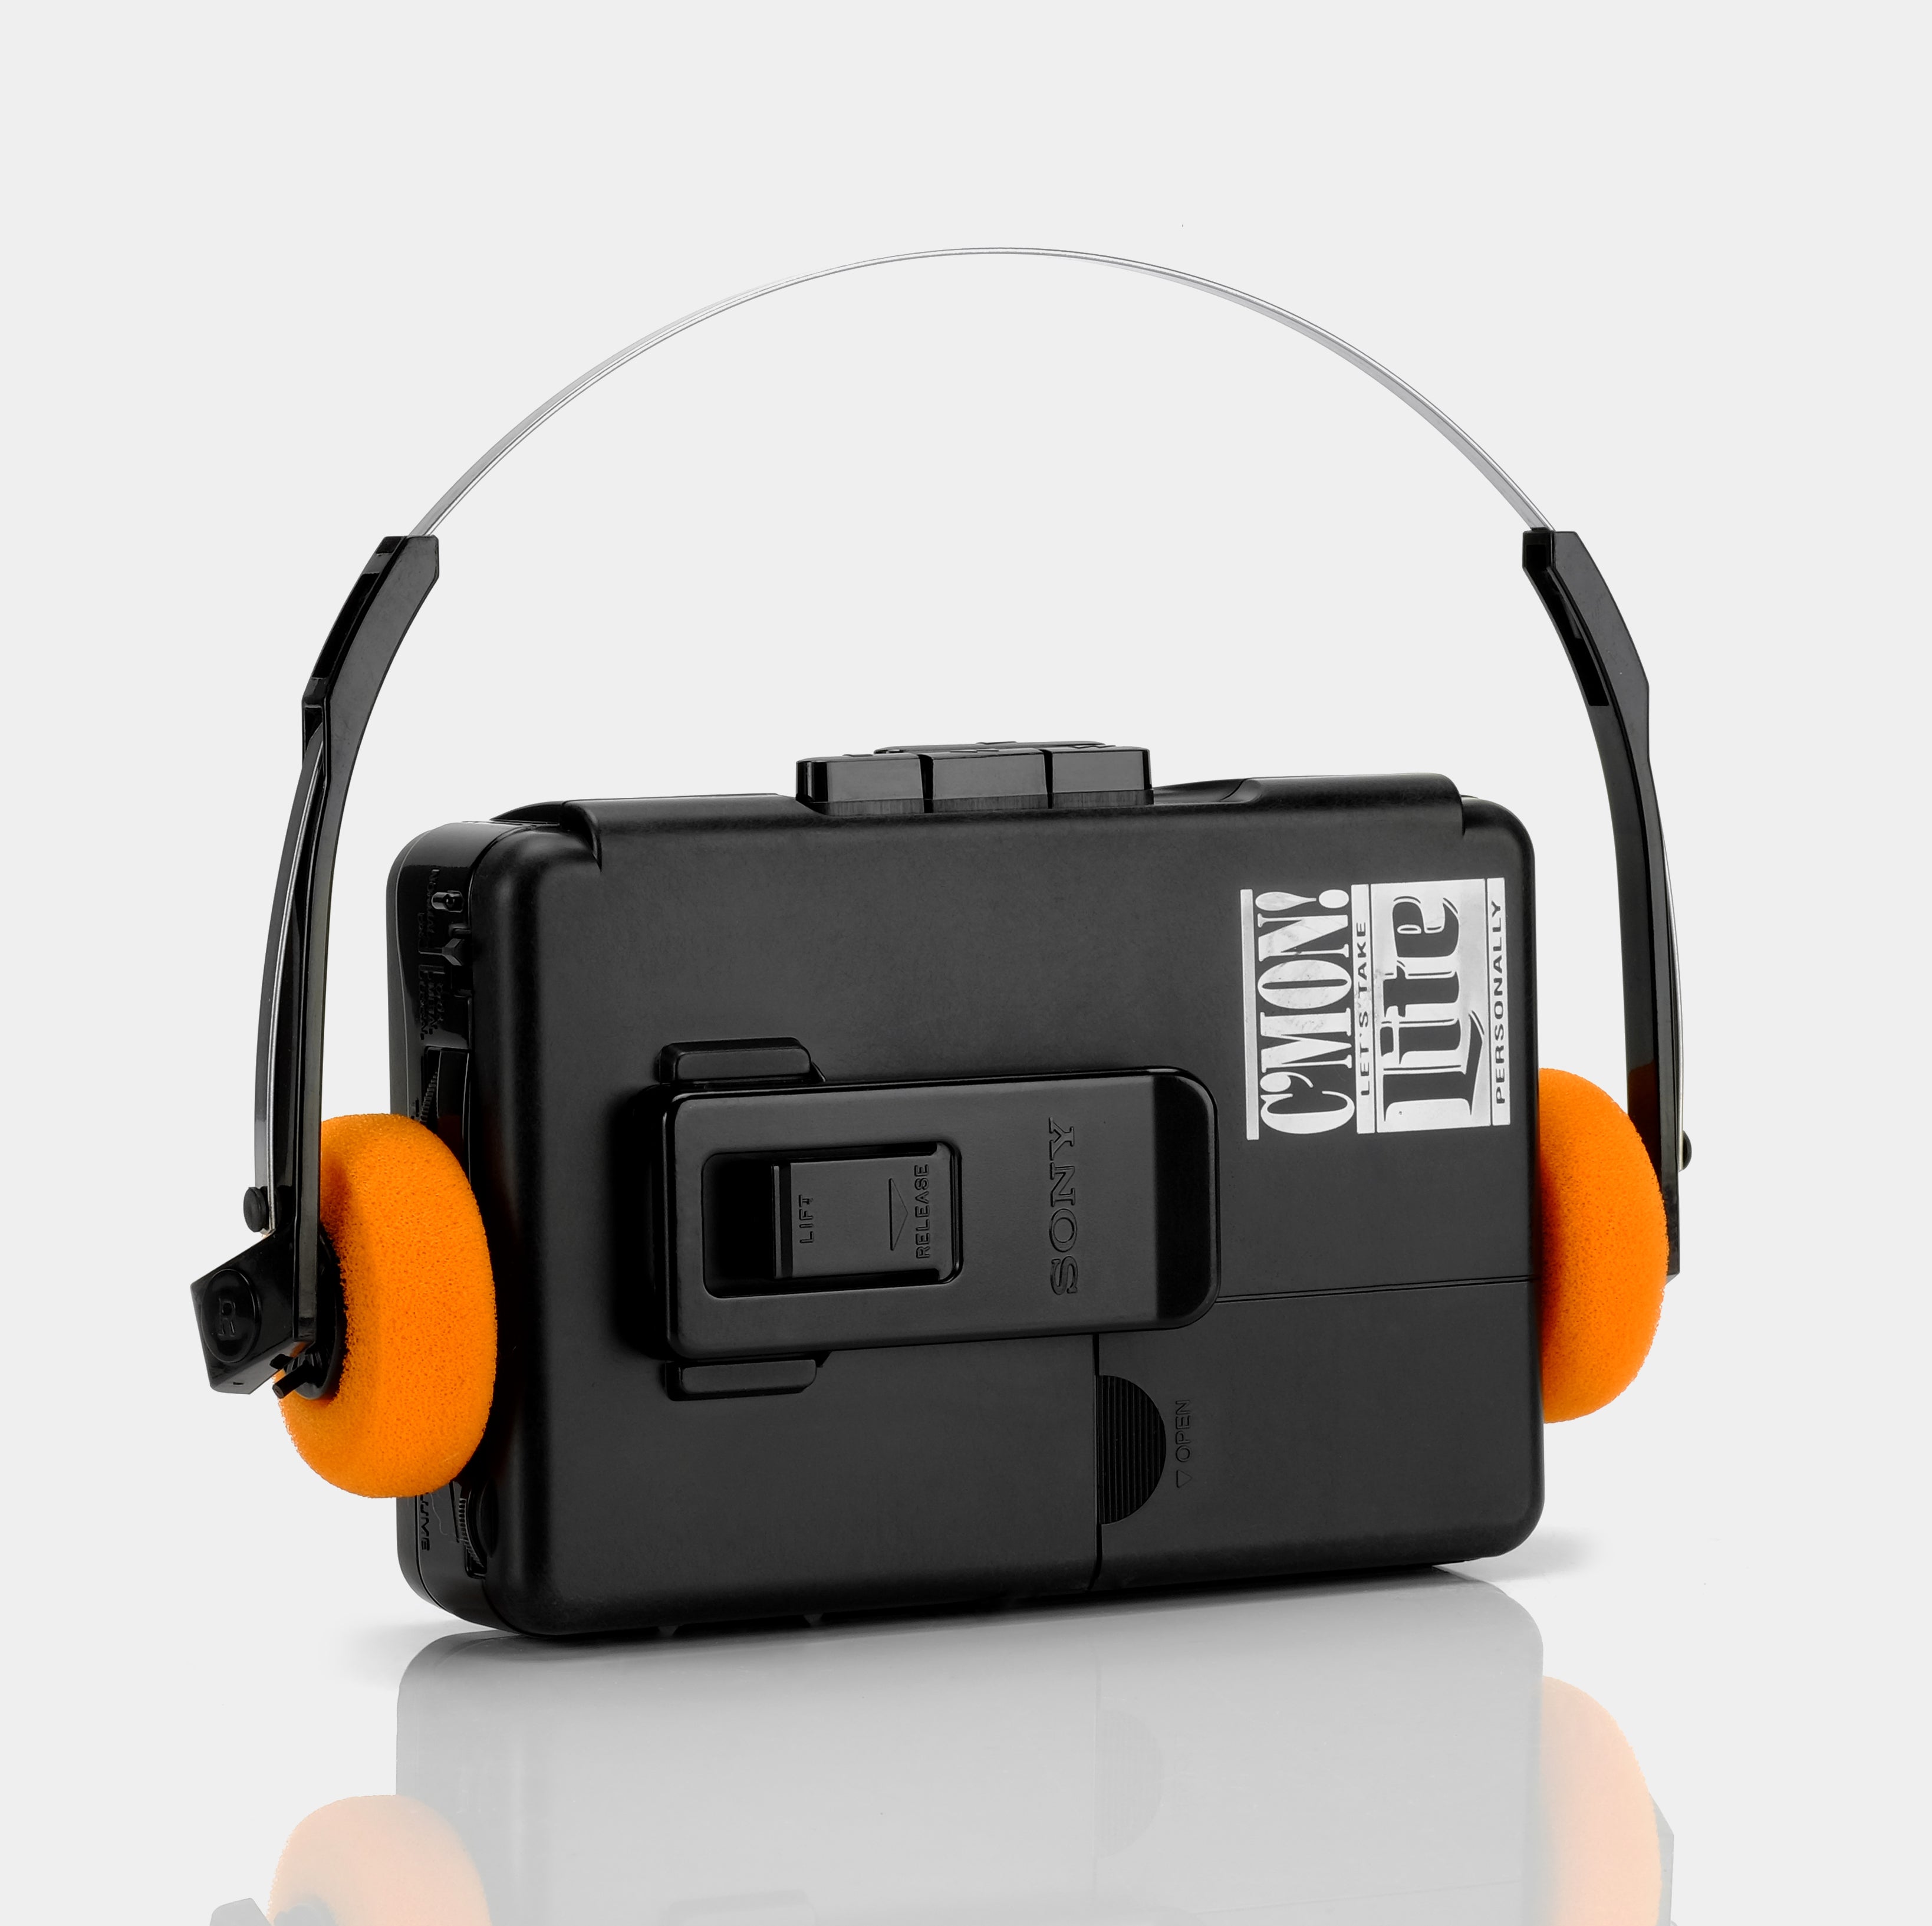 Sony Walkman WM-F2015 Miller Lite Promo AM/FM Portable Cassette Player